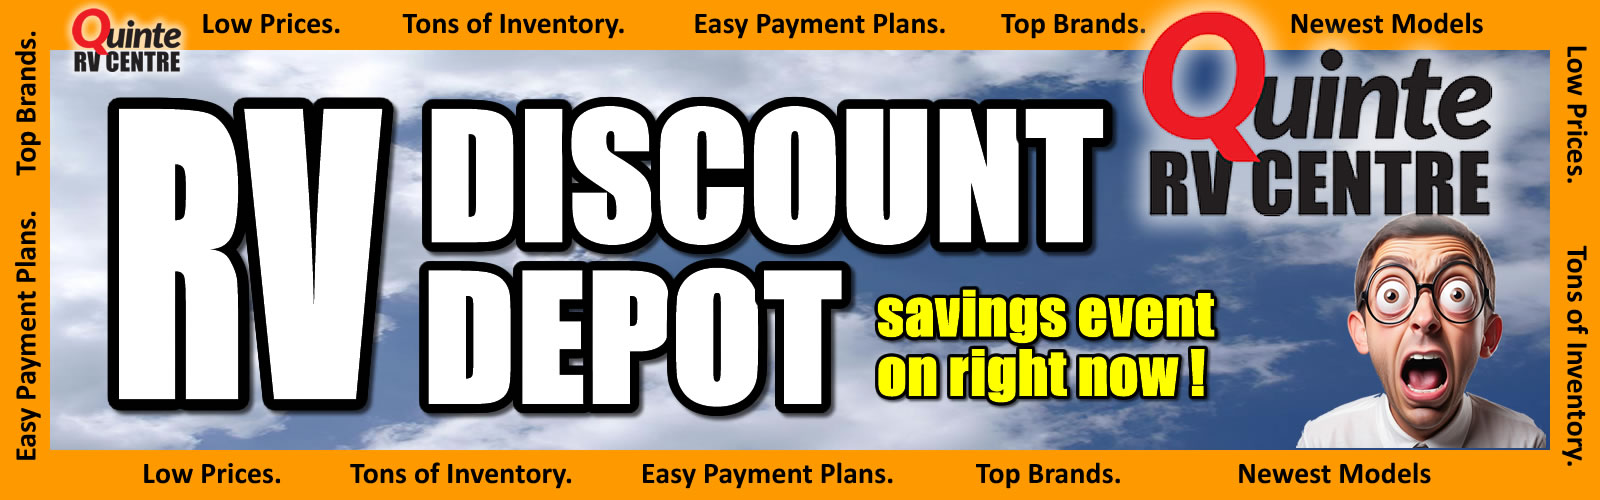 RV Discount Depot Savings Event